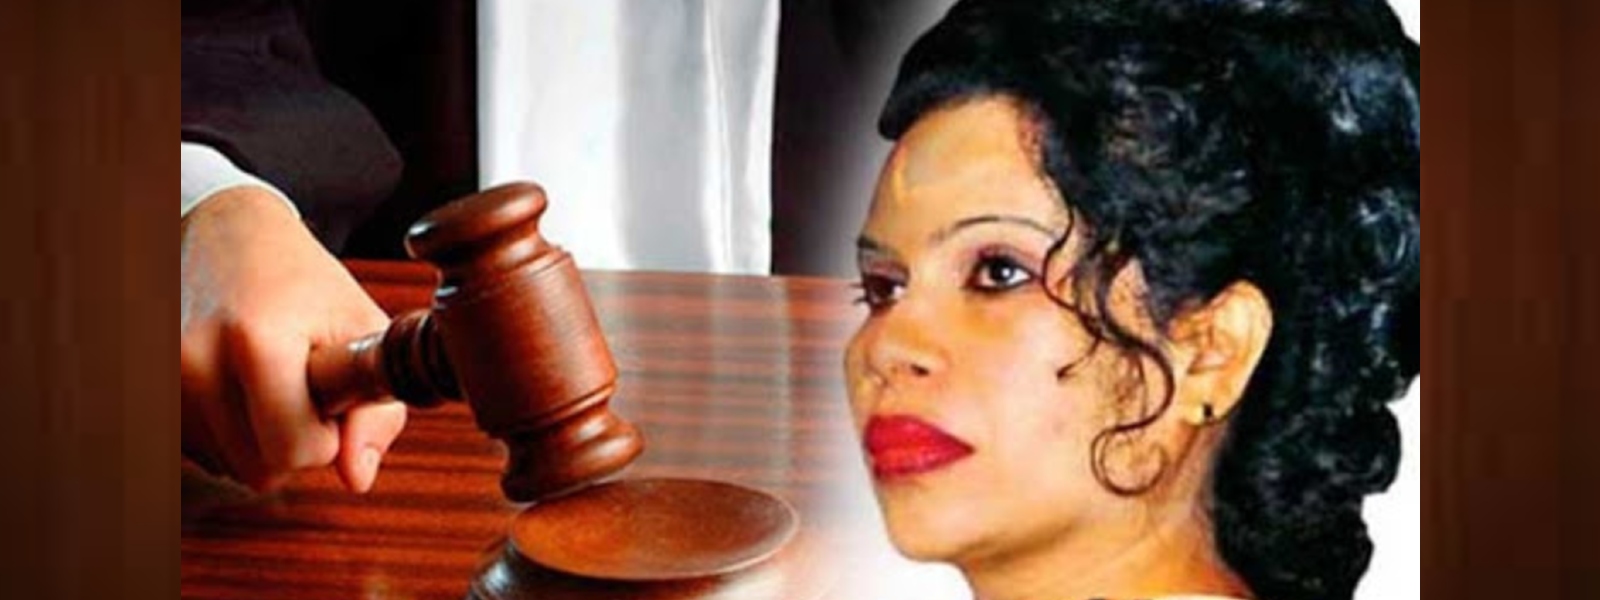 Fake Passport : Shashi Weerawansa’s bail appeal postponed